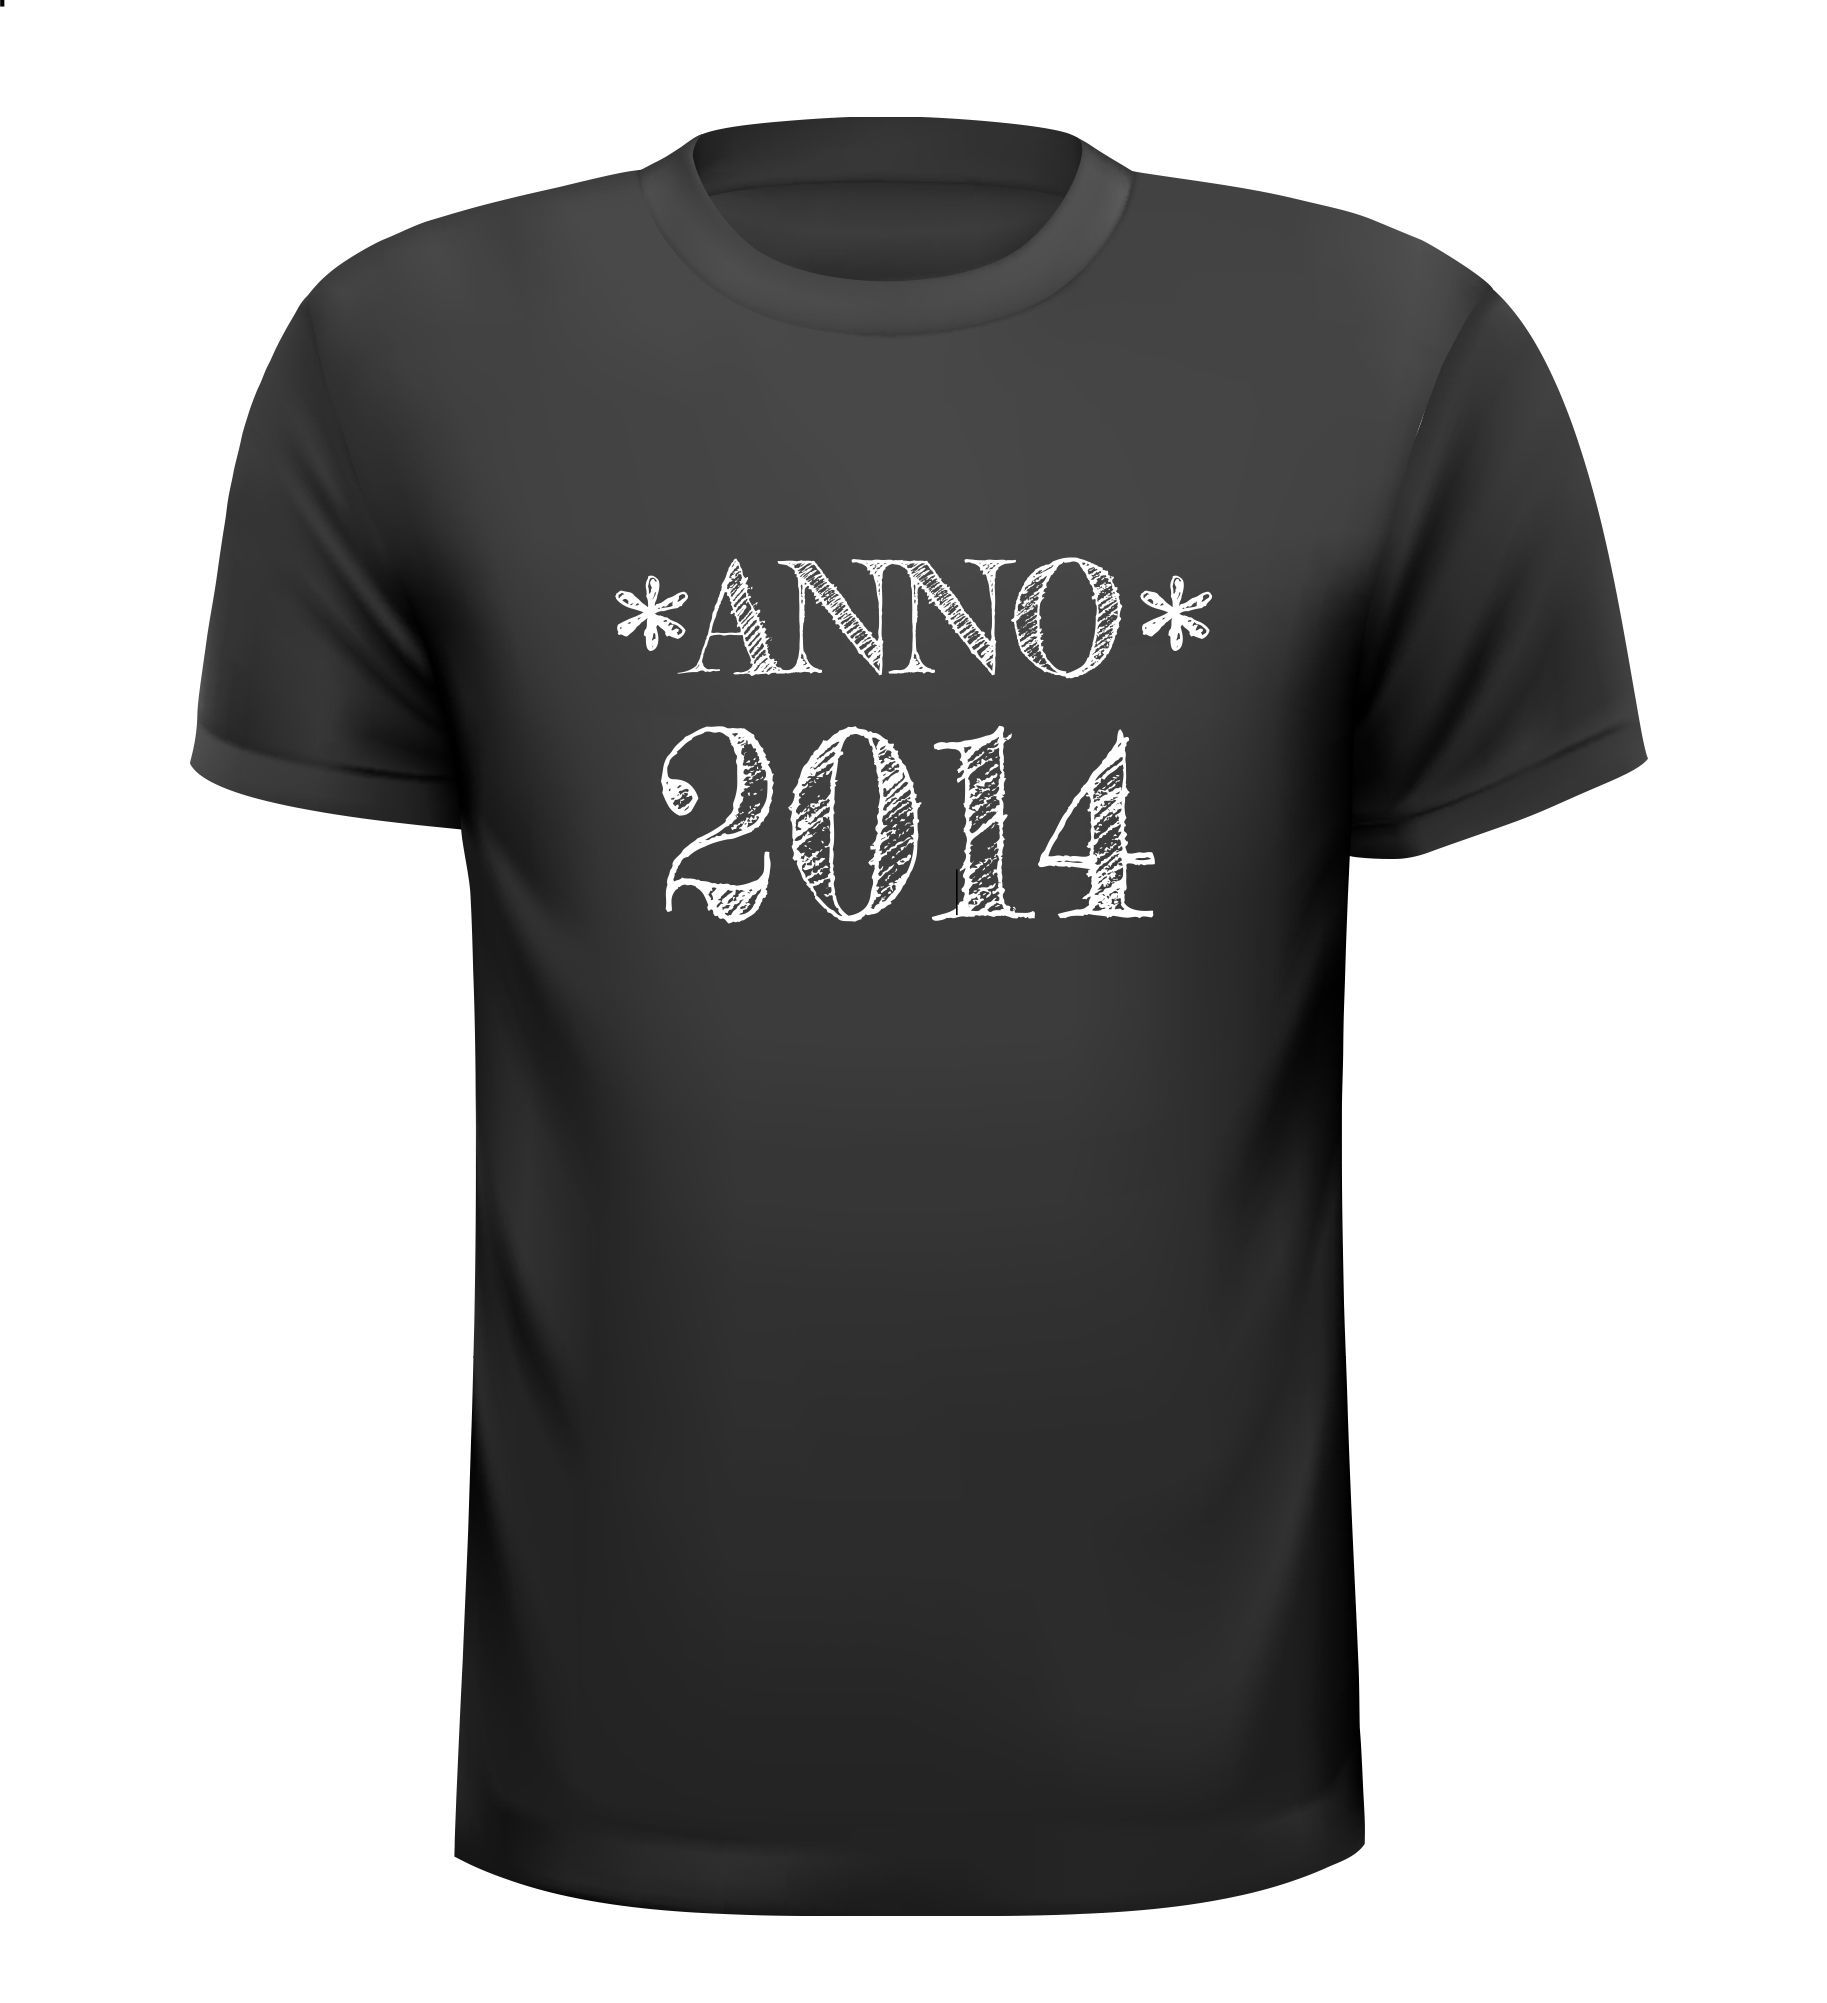 Vintage shirtje jaartal 2014 en de tekst Anno